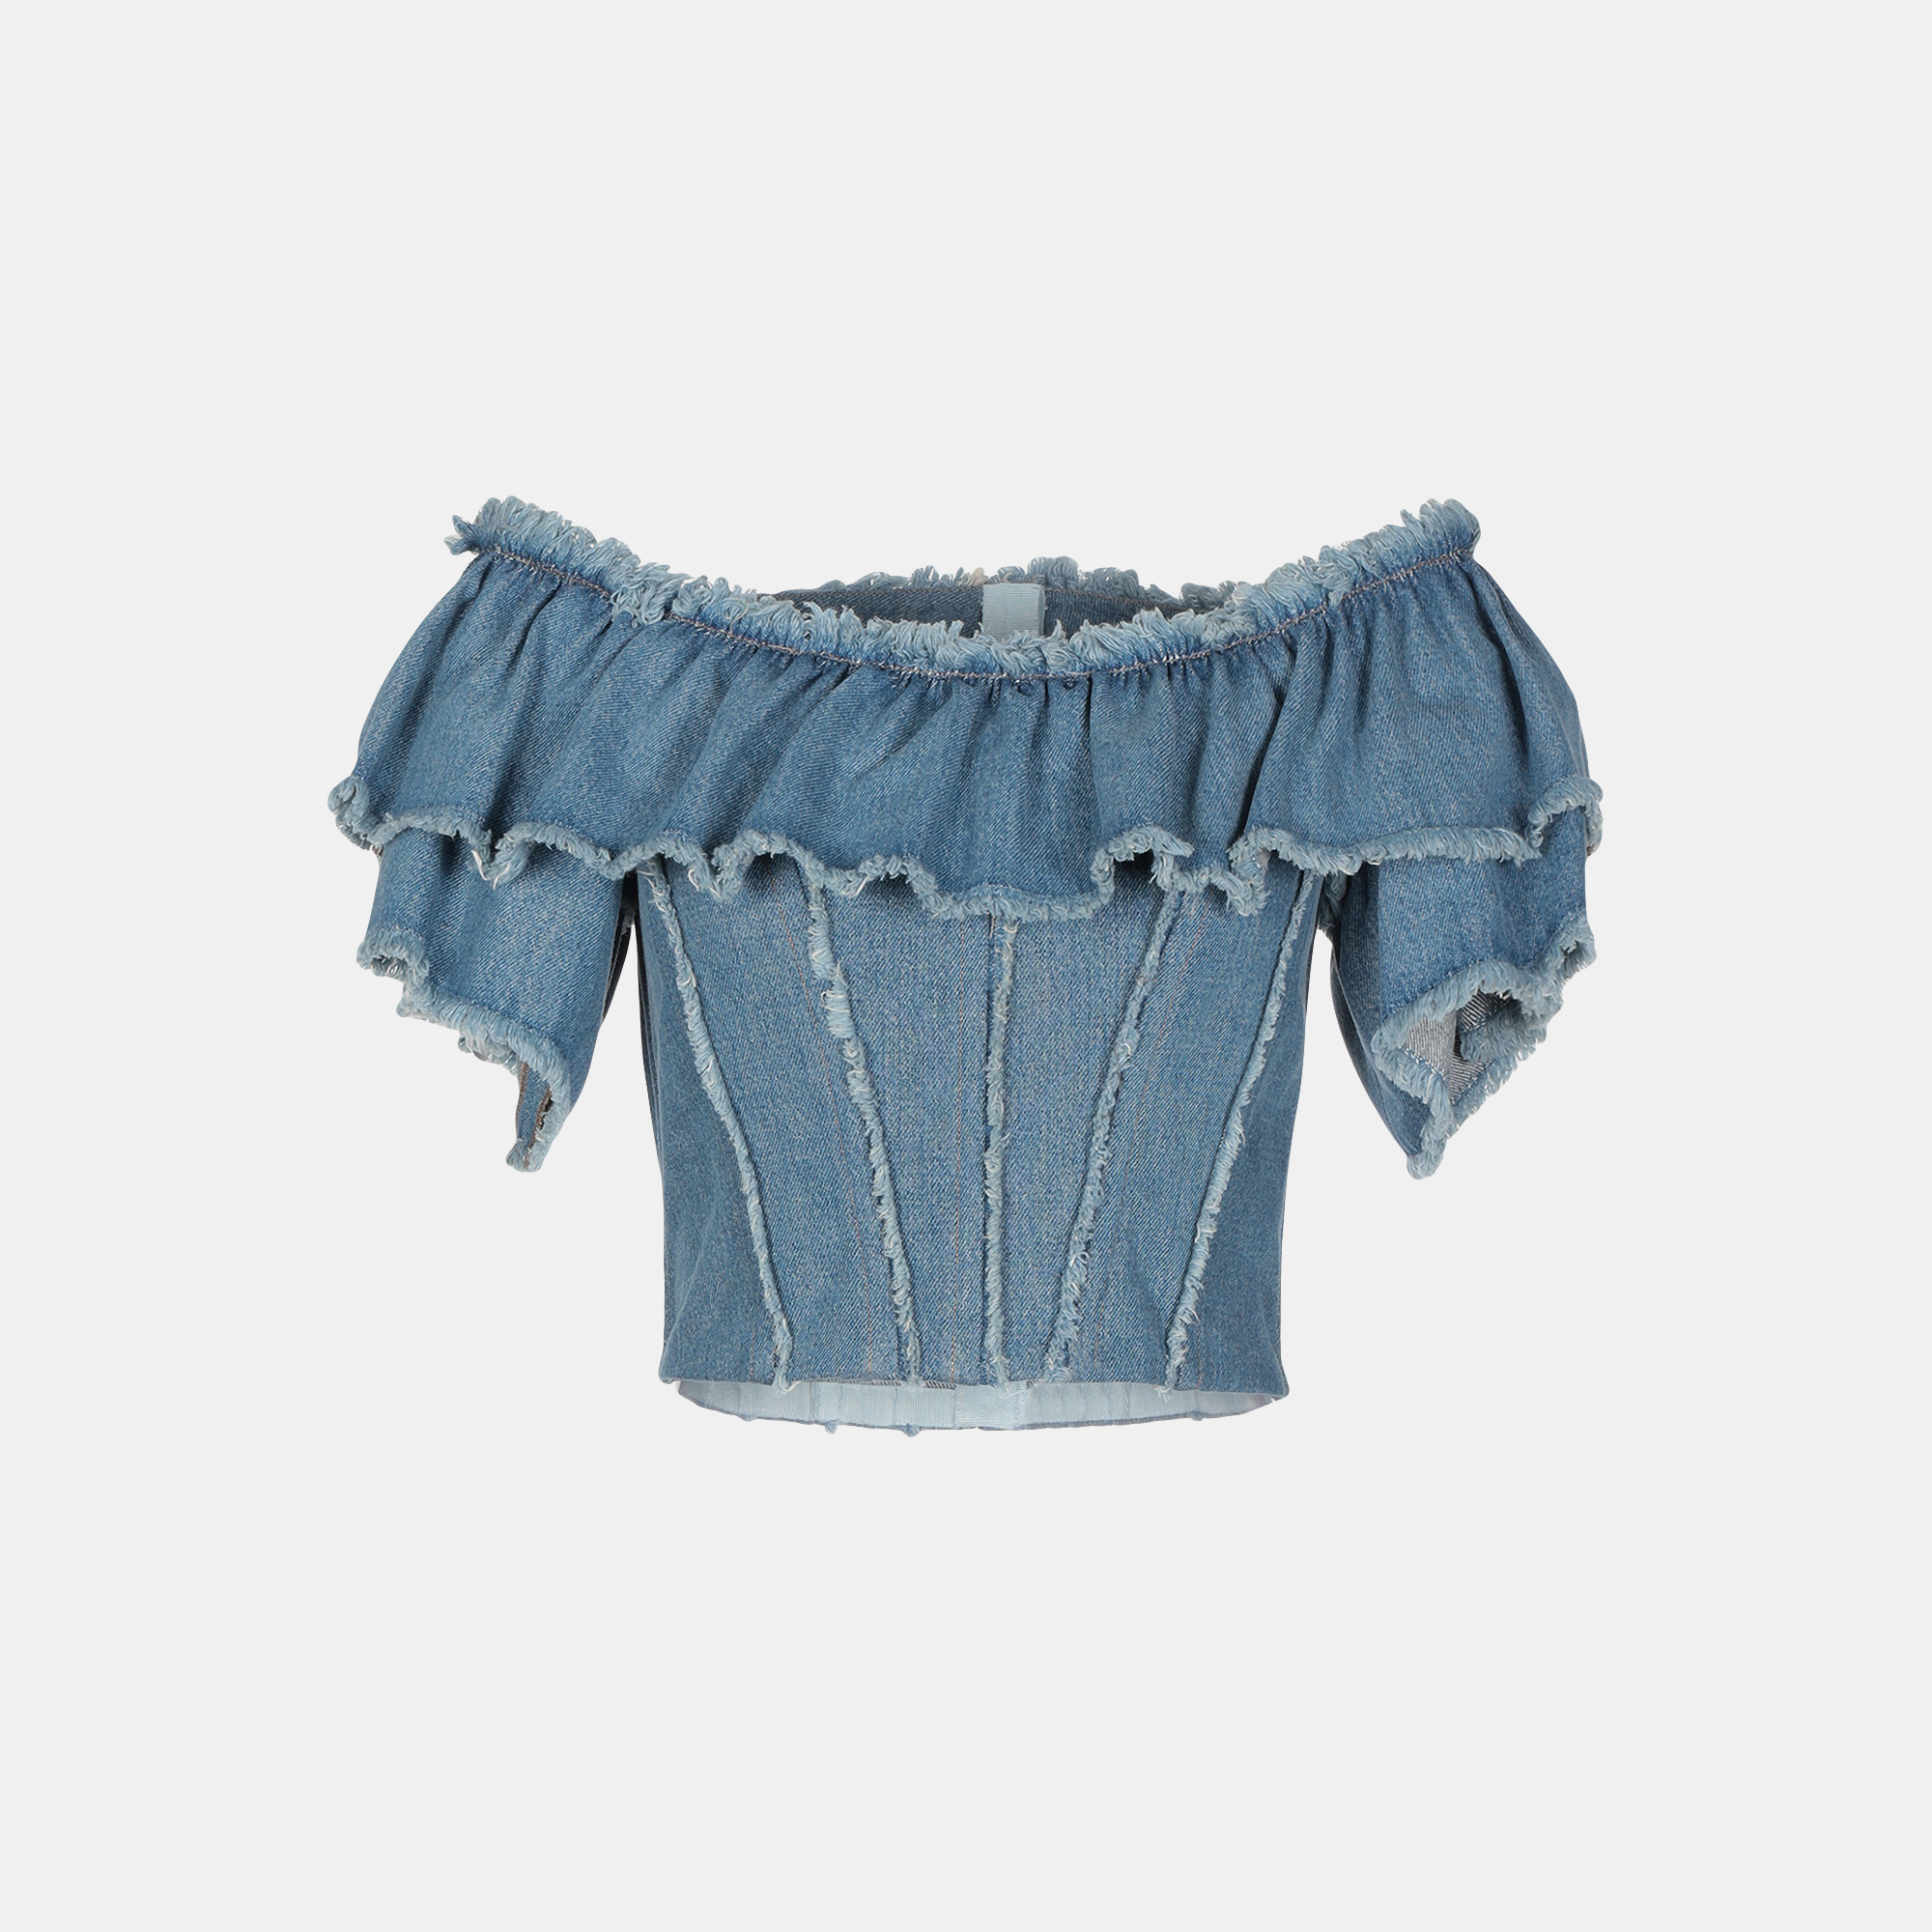 Dolce & gabbana blue denim corset top xs (it 36)